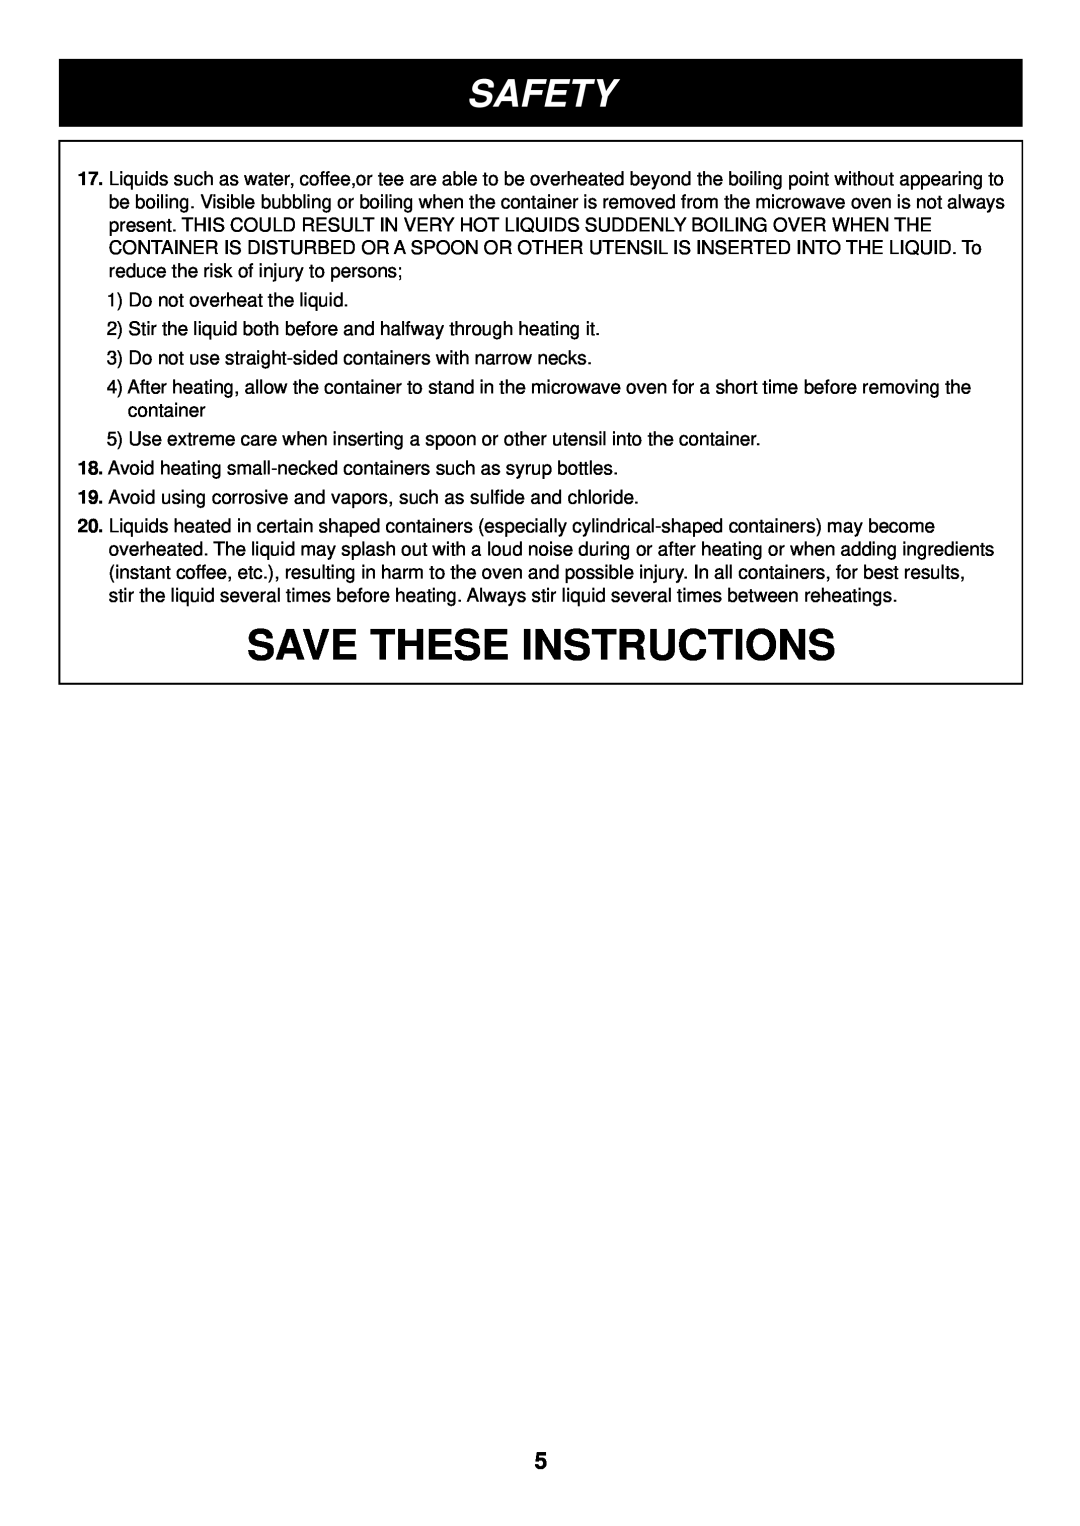 LG Electronics LMA840W manual Save These Instructions, Safety 